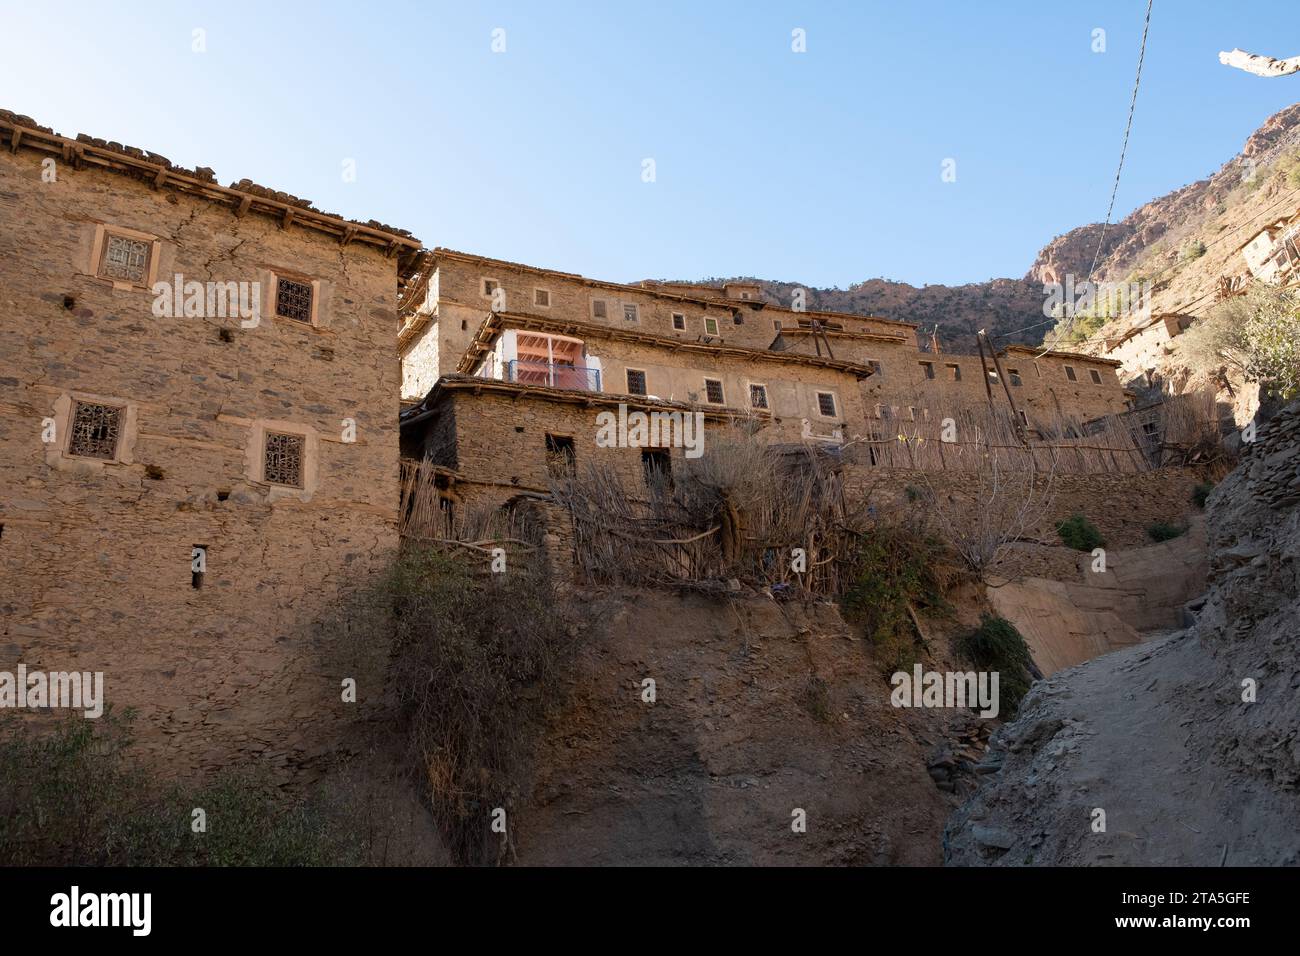 The mountain village of Tiguerte, Atlas Mountains, Morocco Stock Photo